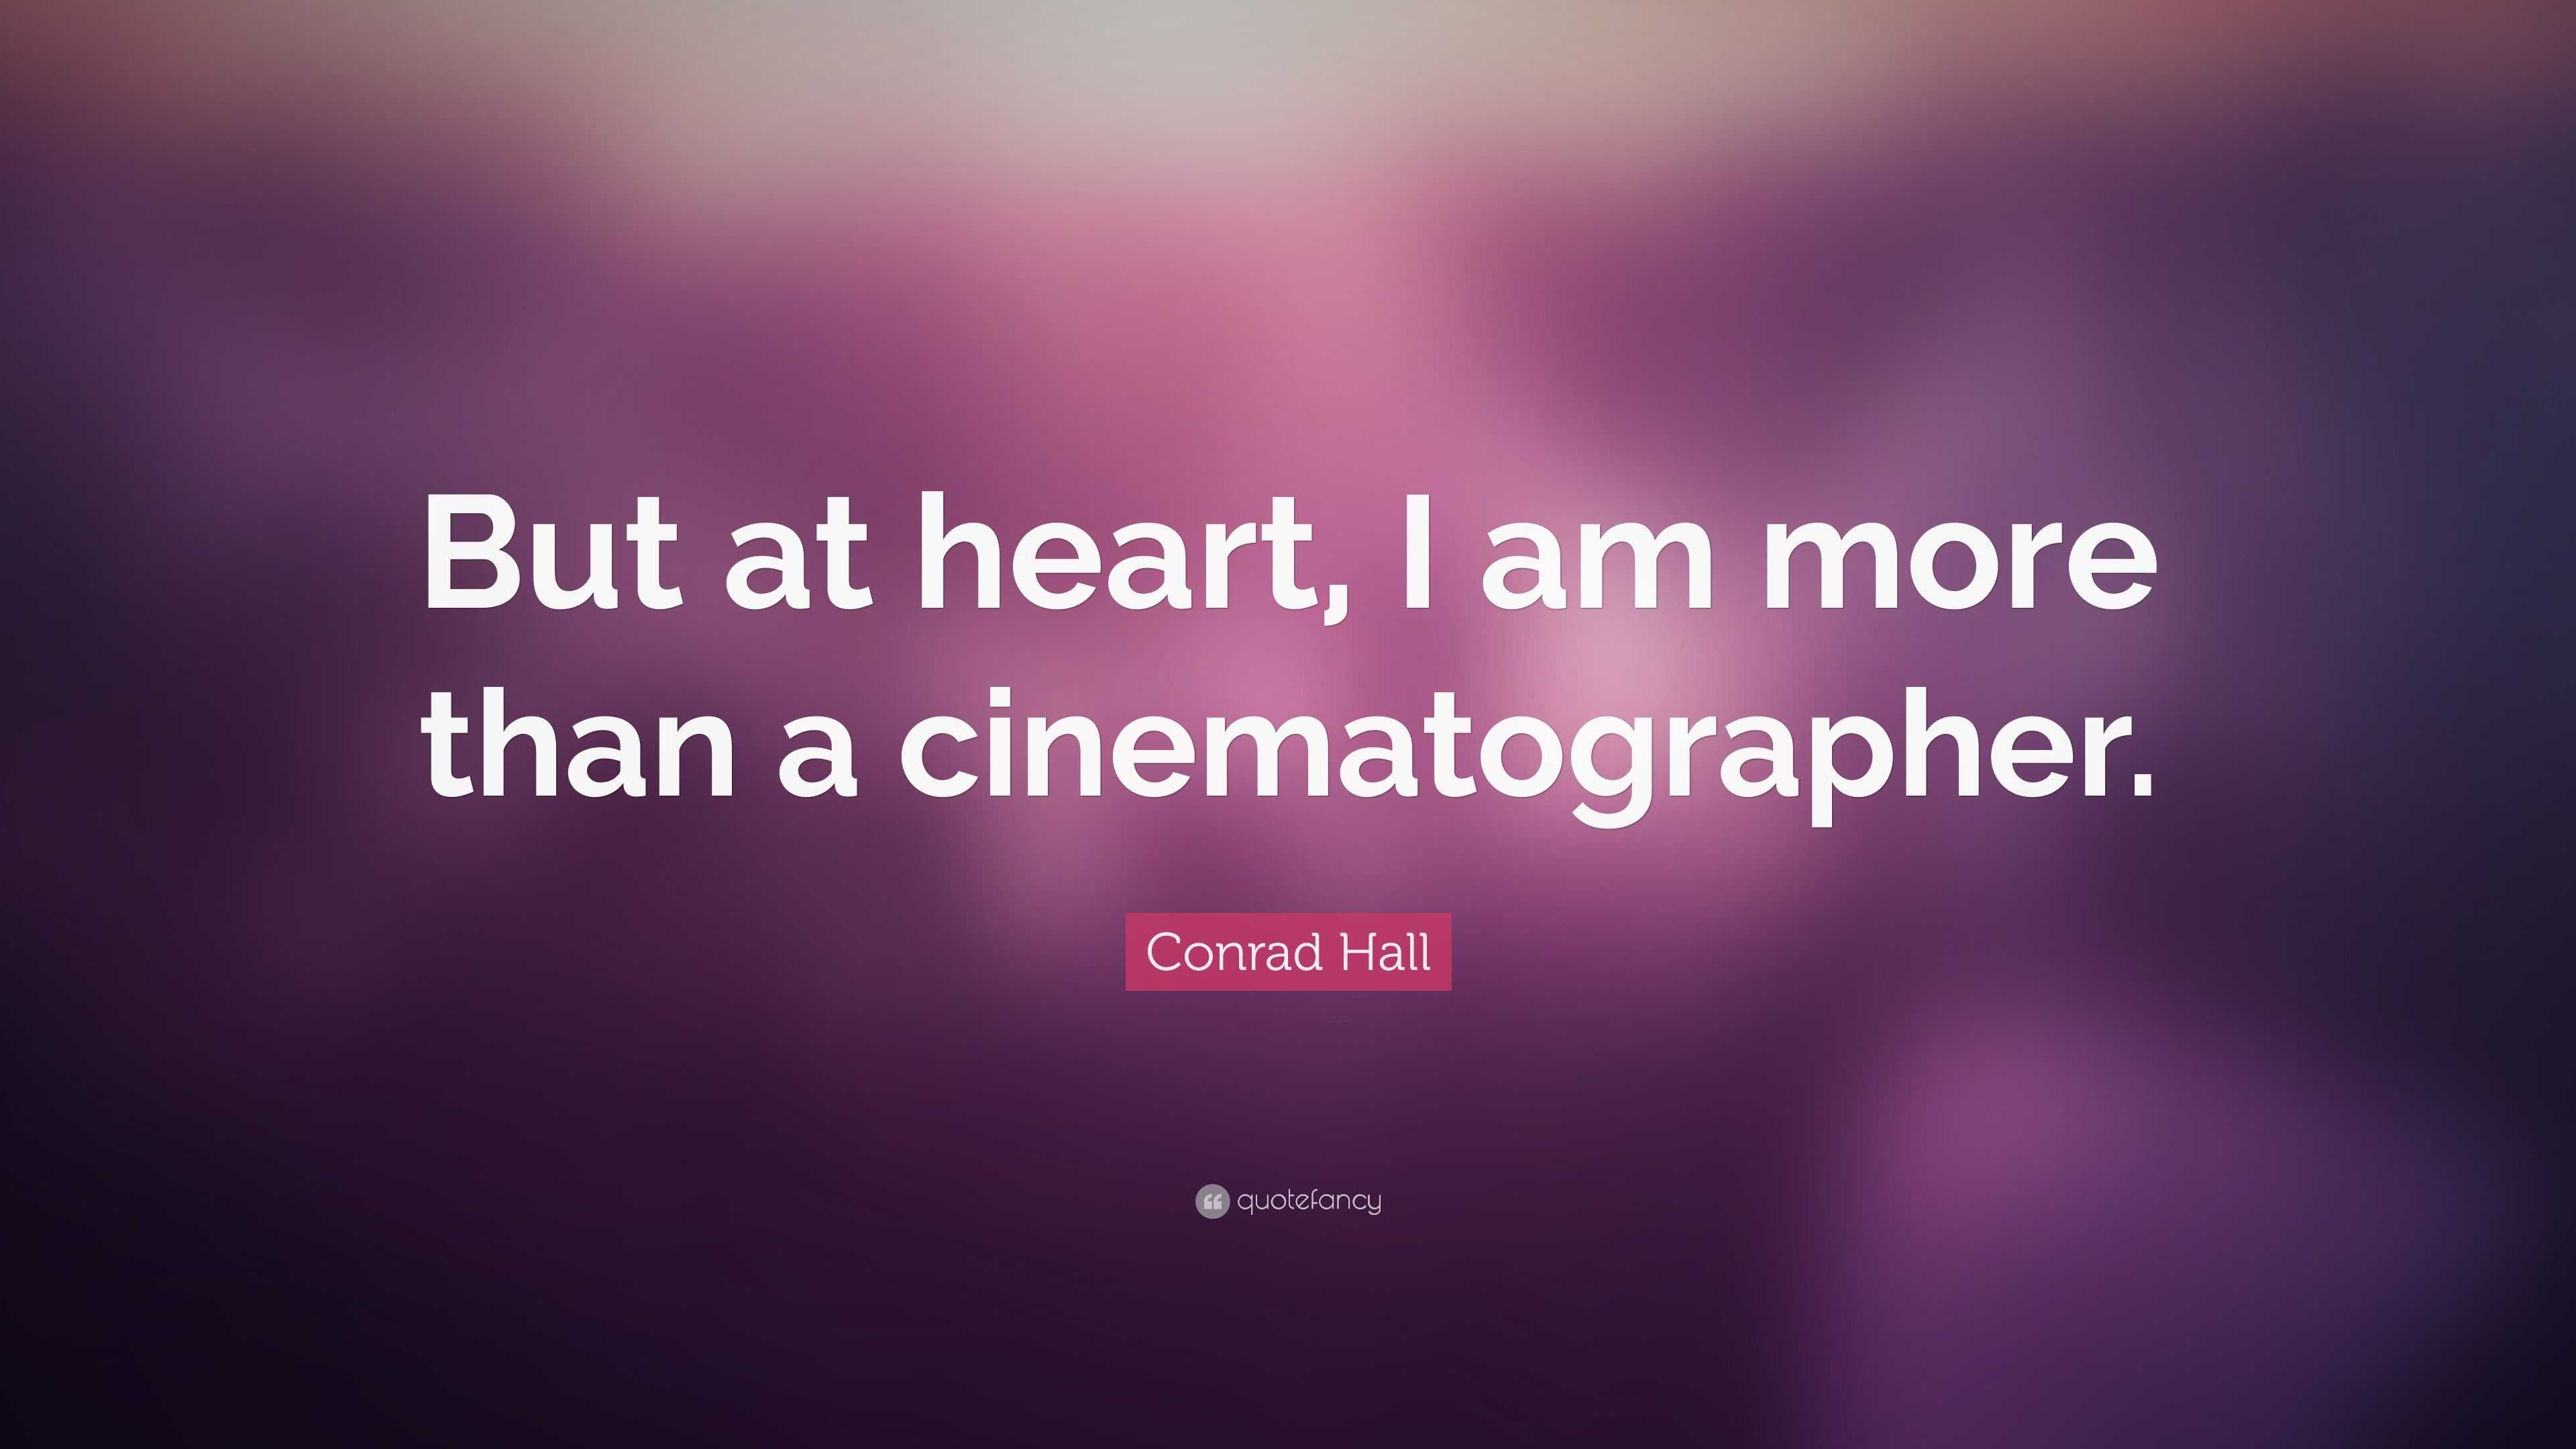 Cinematographer conrad